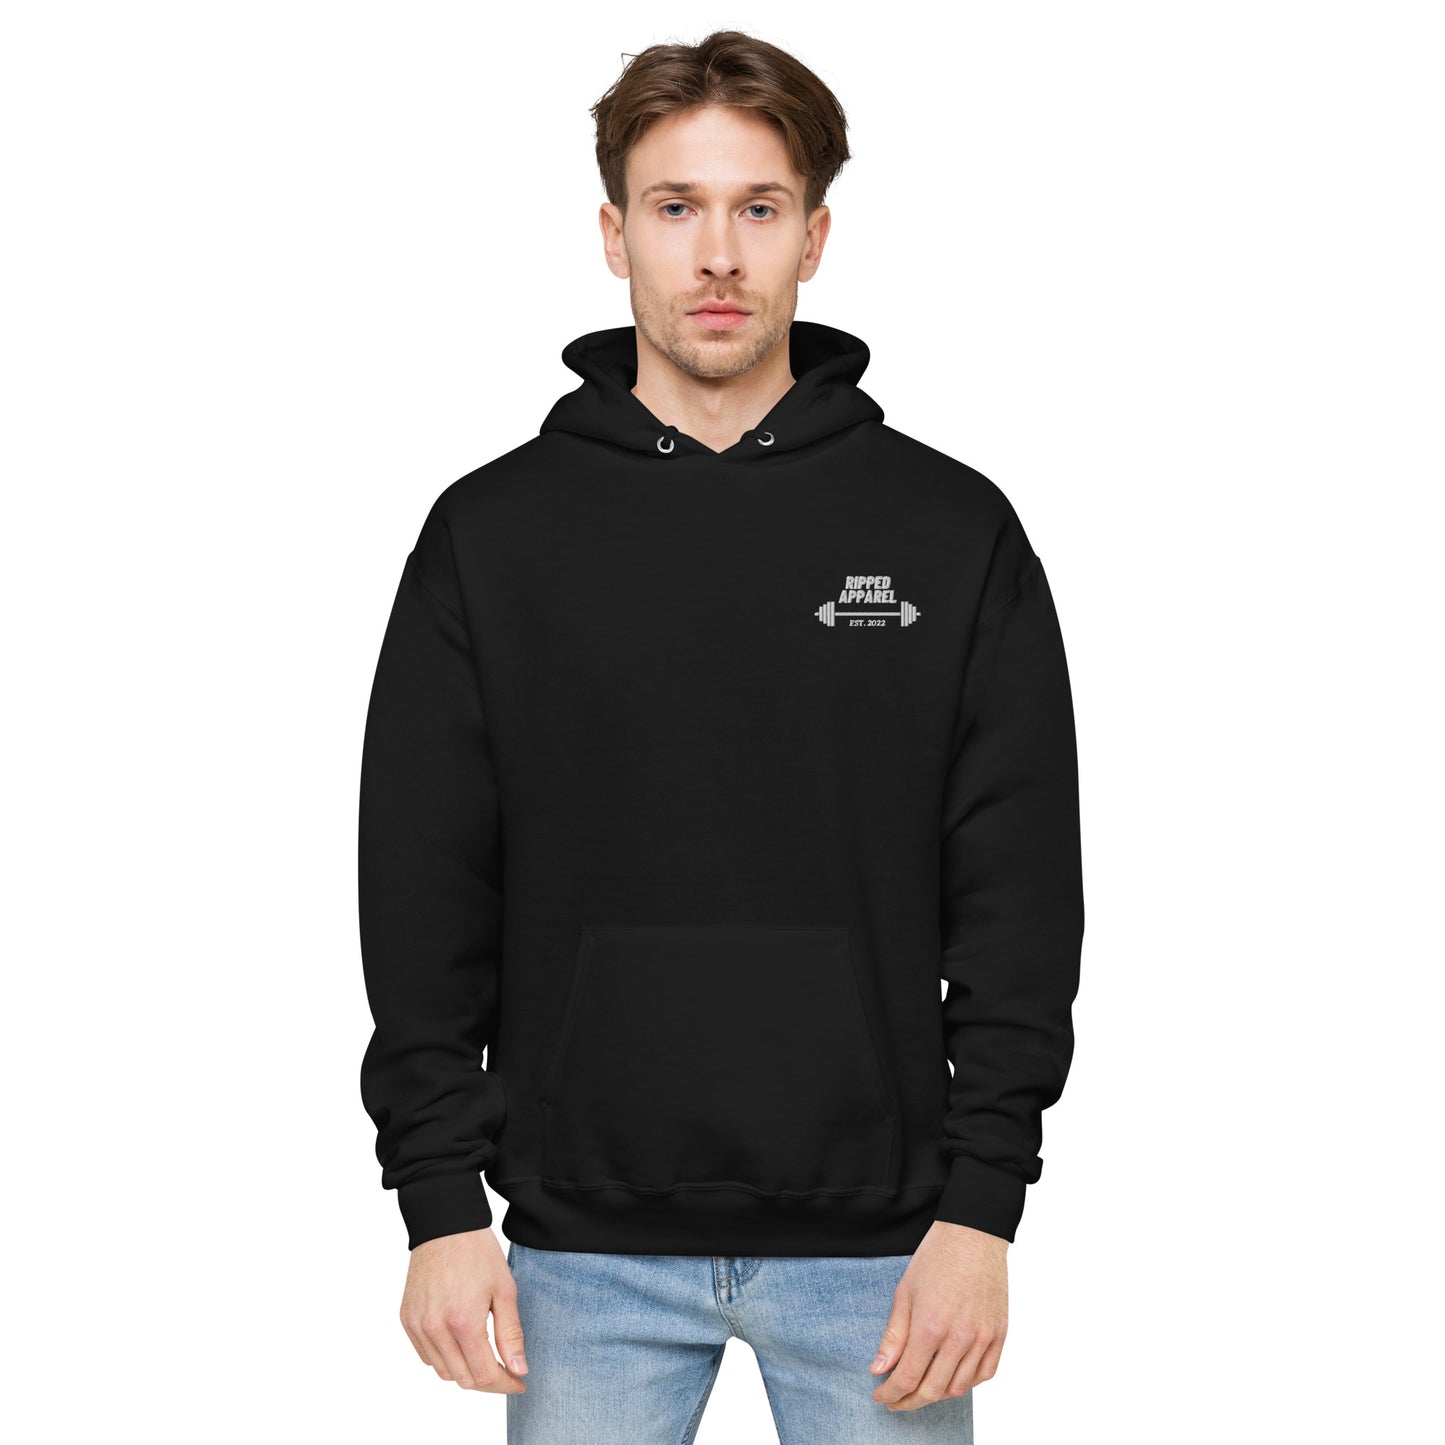 Unisex fleece "Ripped" hoodie